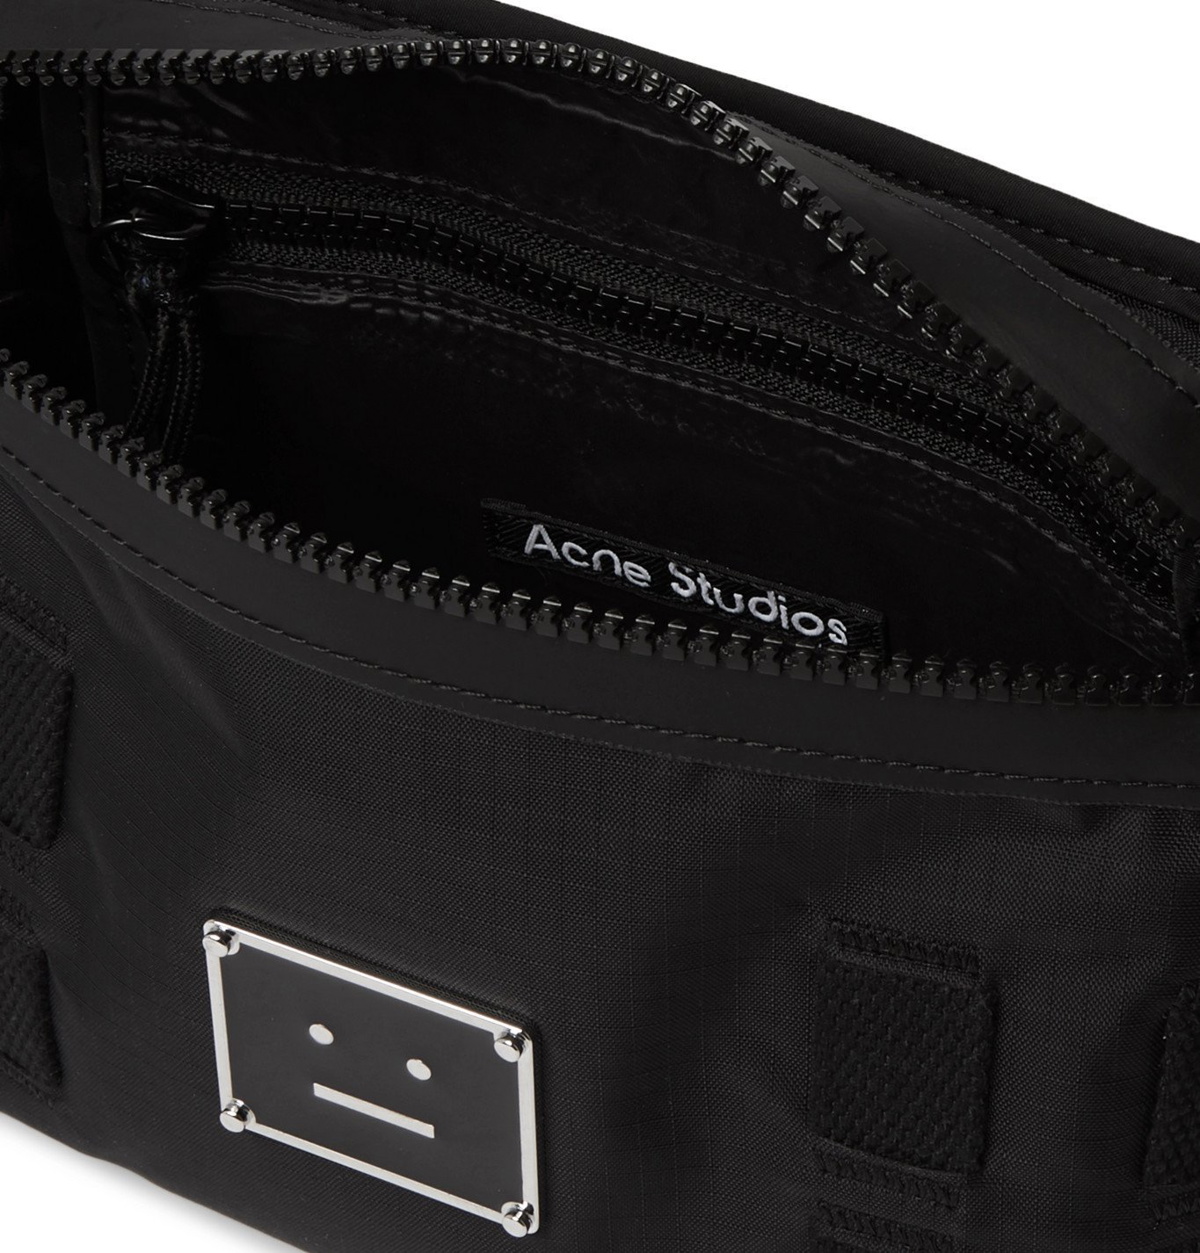 Acne Studios Black Appliqué Bag